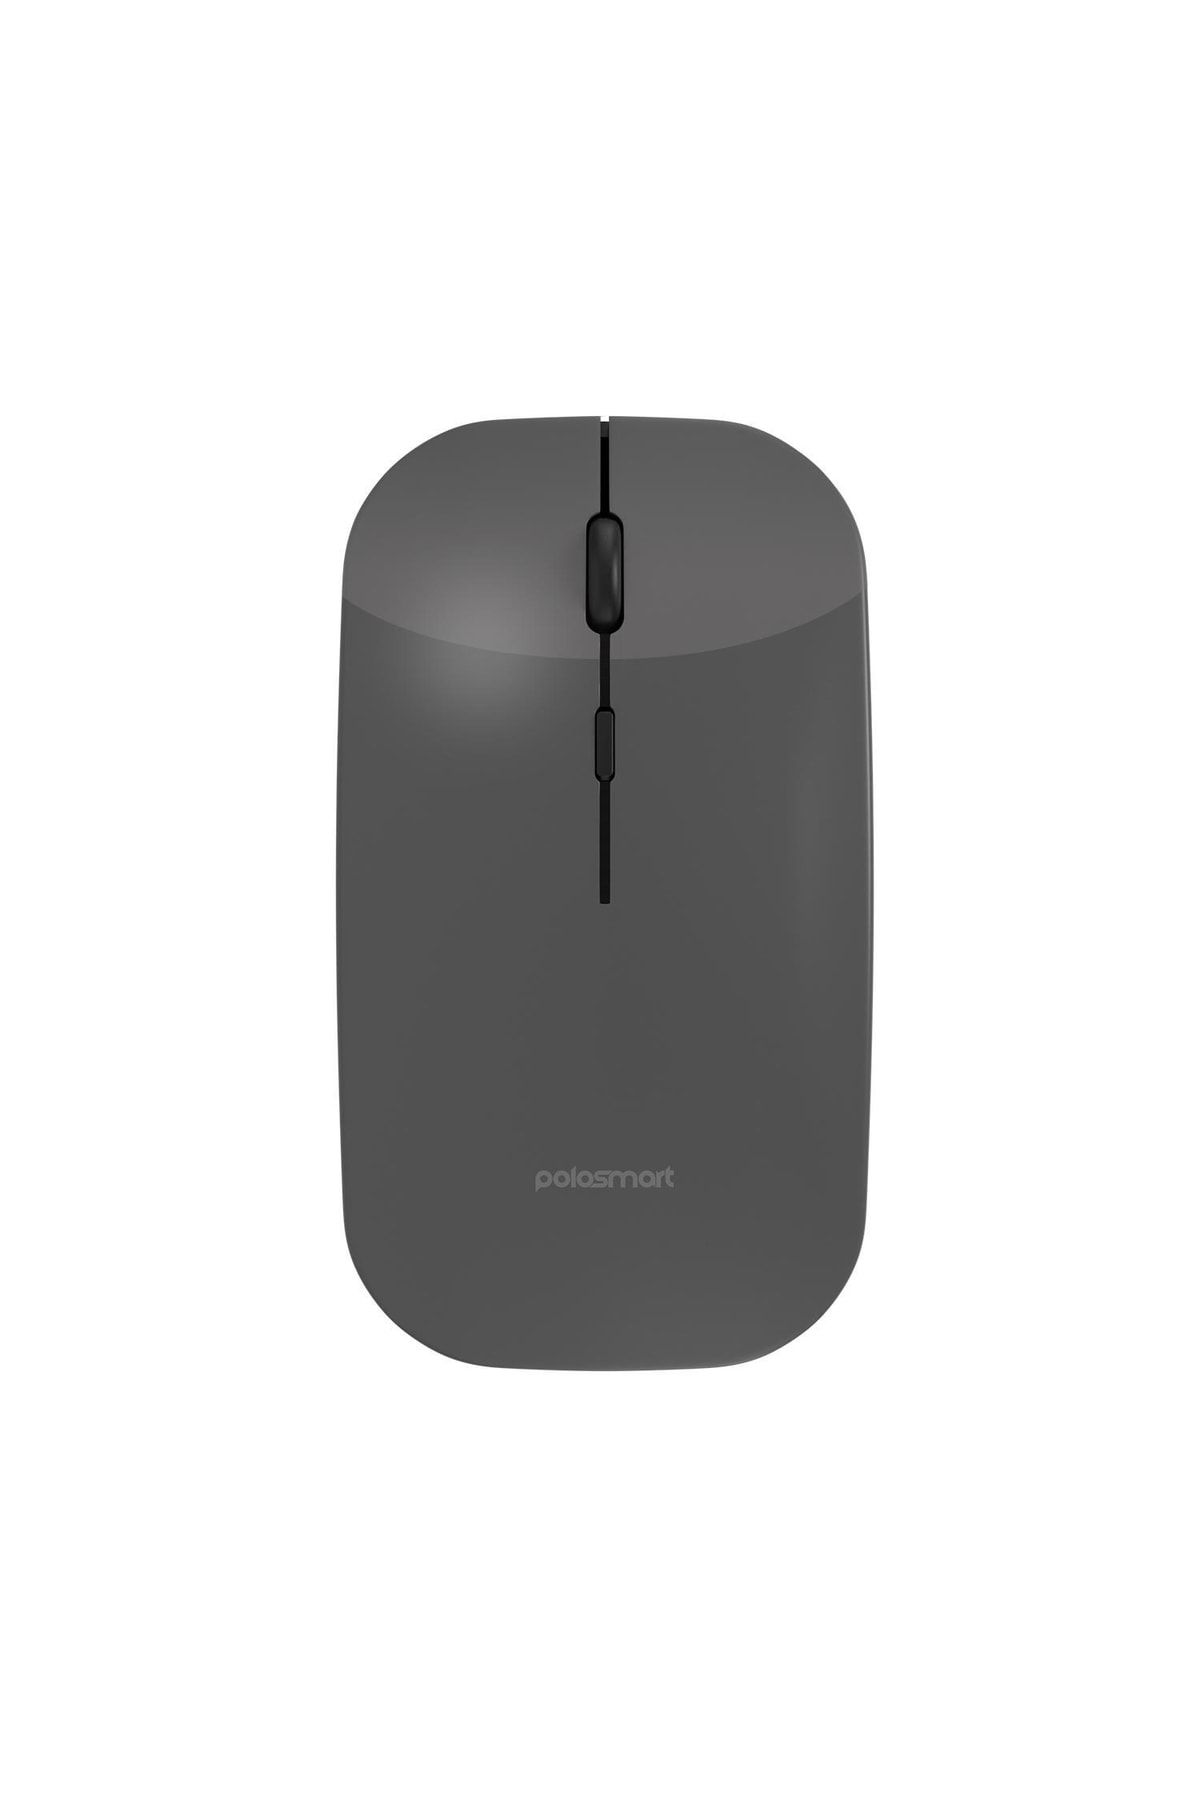 Polosmart Pswm15 Hibrit Bluetooth & Wireless Pilli Kablosuz Mouse Koyu Gri